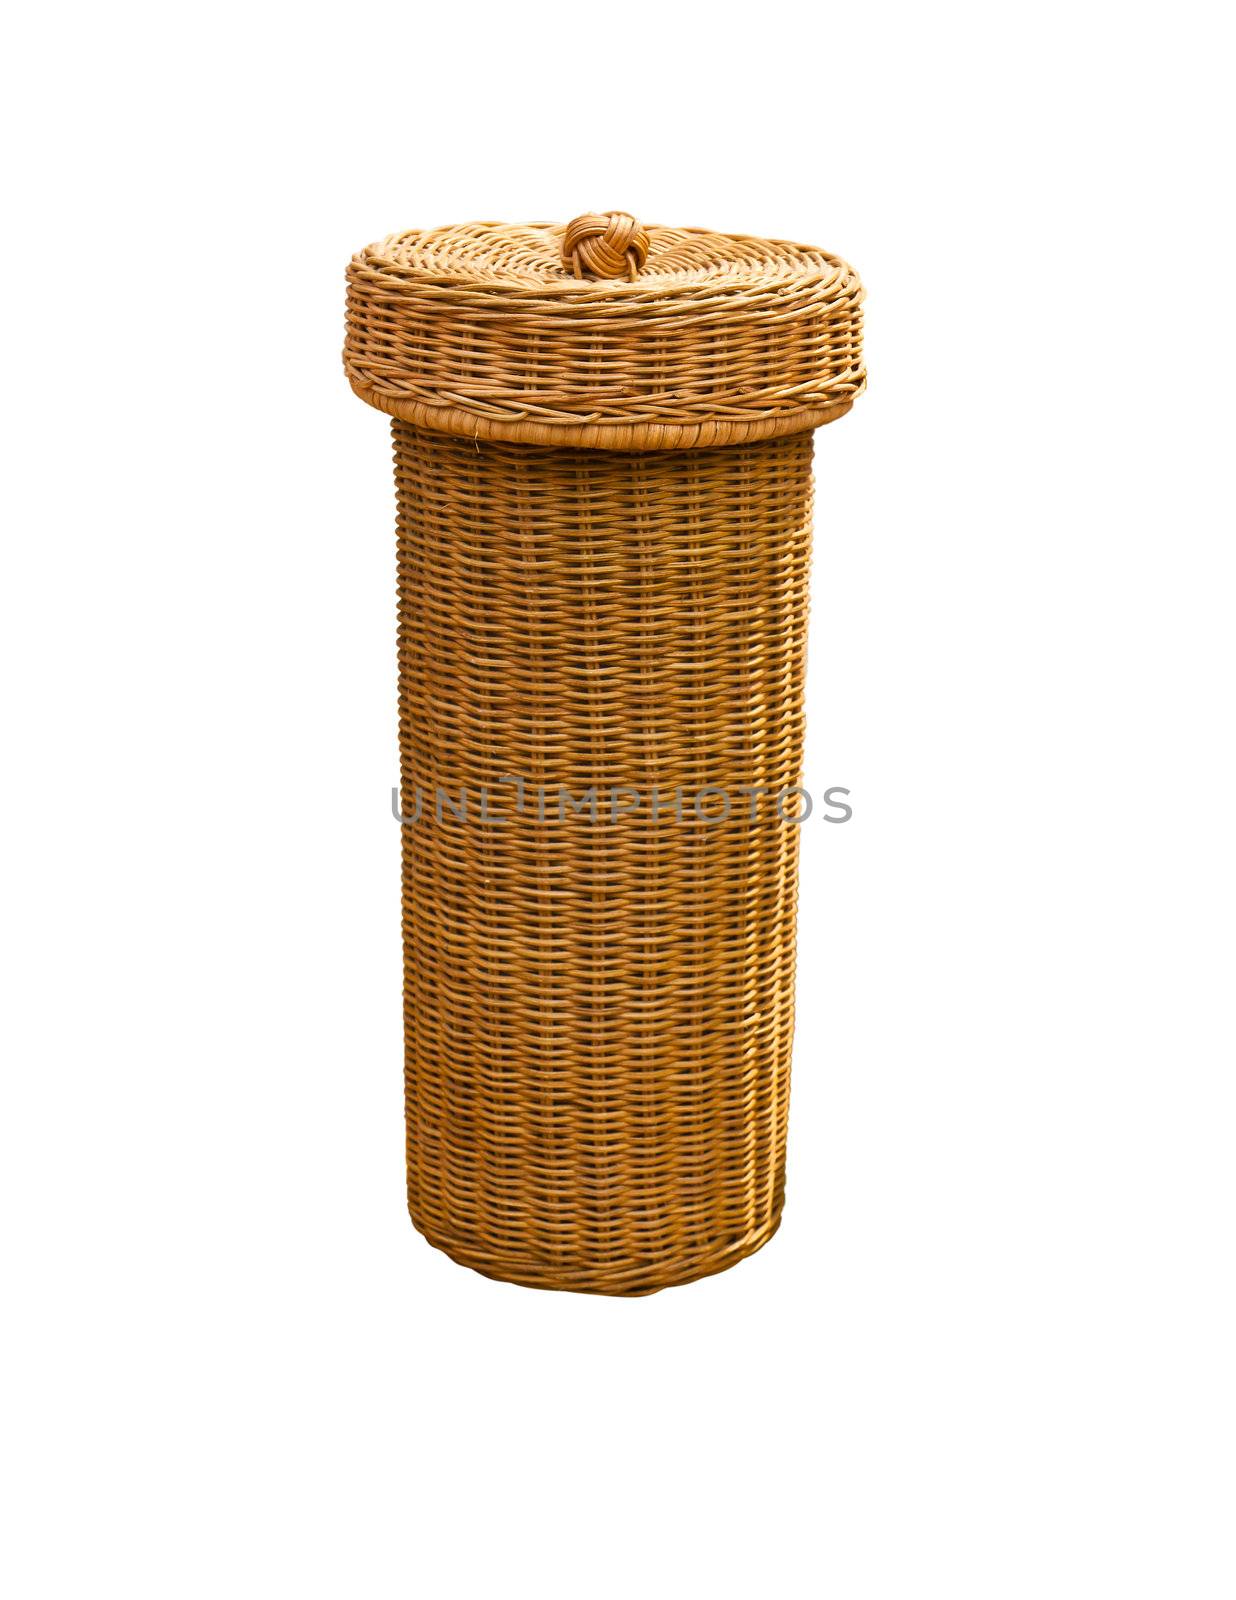 Basket rattan by stoonn